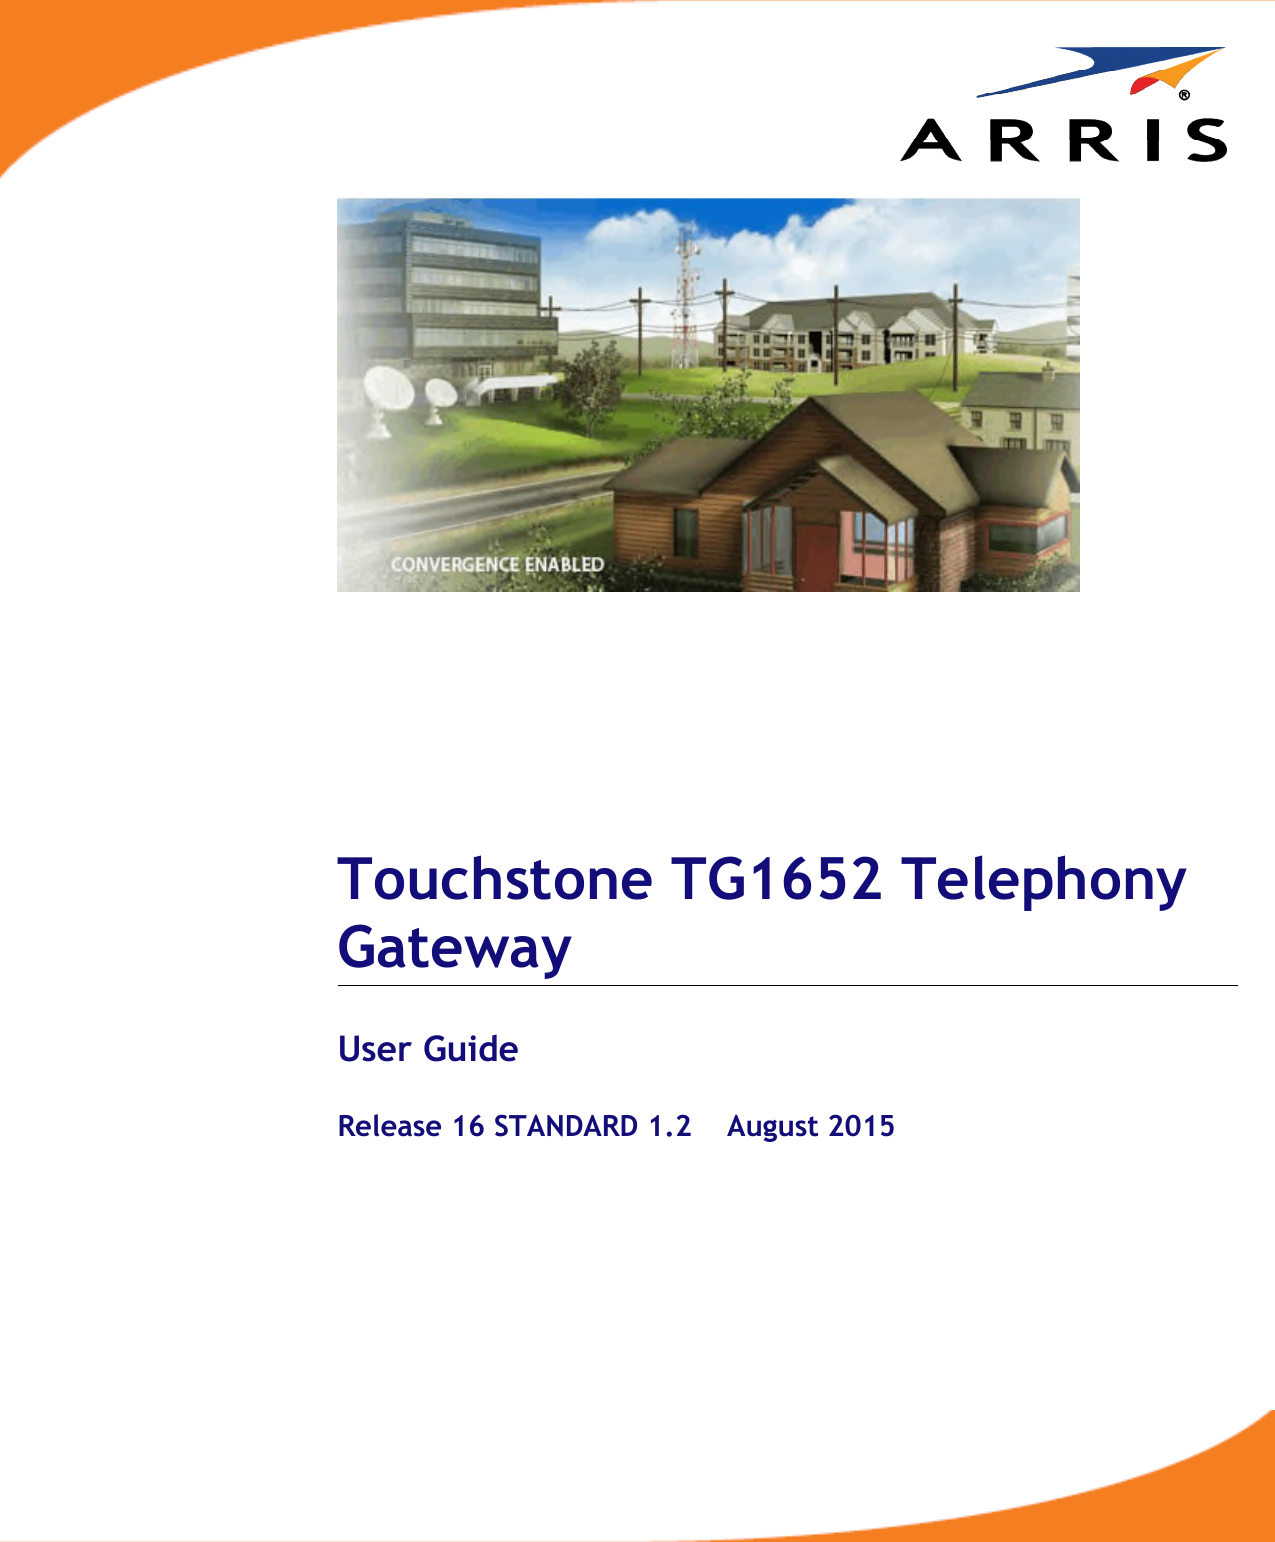 Touchstone TG1652 TelephonyGatewayUser GuideRelease 16 STANDARD 1.2 August 2015